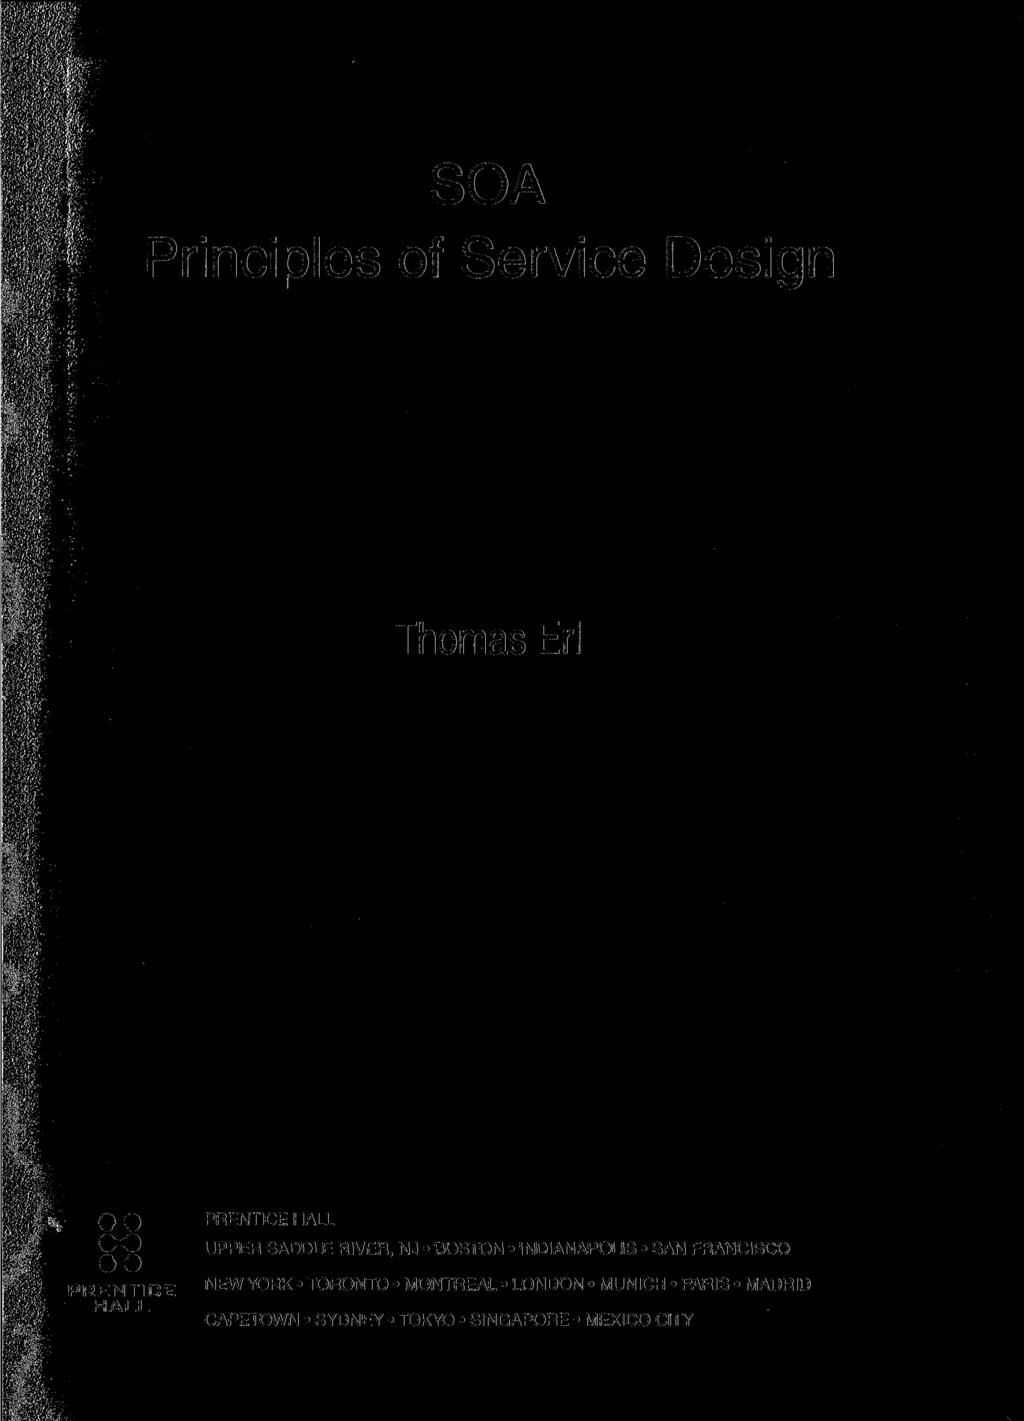 SOA Principles of Service Design Thomas Erl 0 0 PRENTICE HALL UPPER SADDLE RIVER, NJ BOSTON INDIANAPOLIS SAN